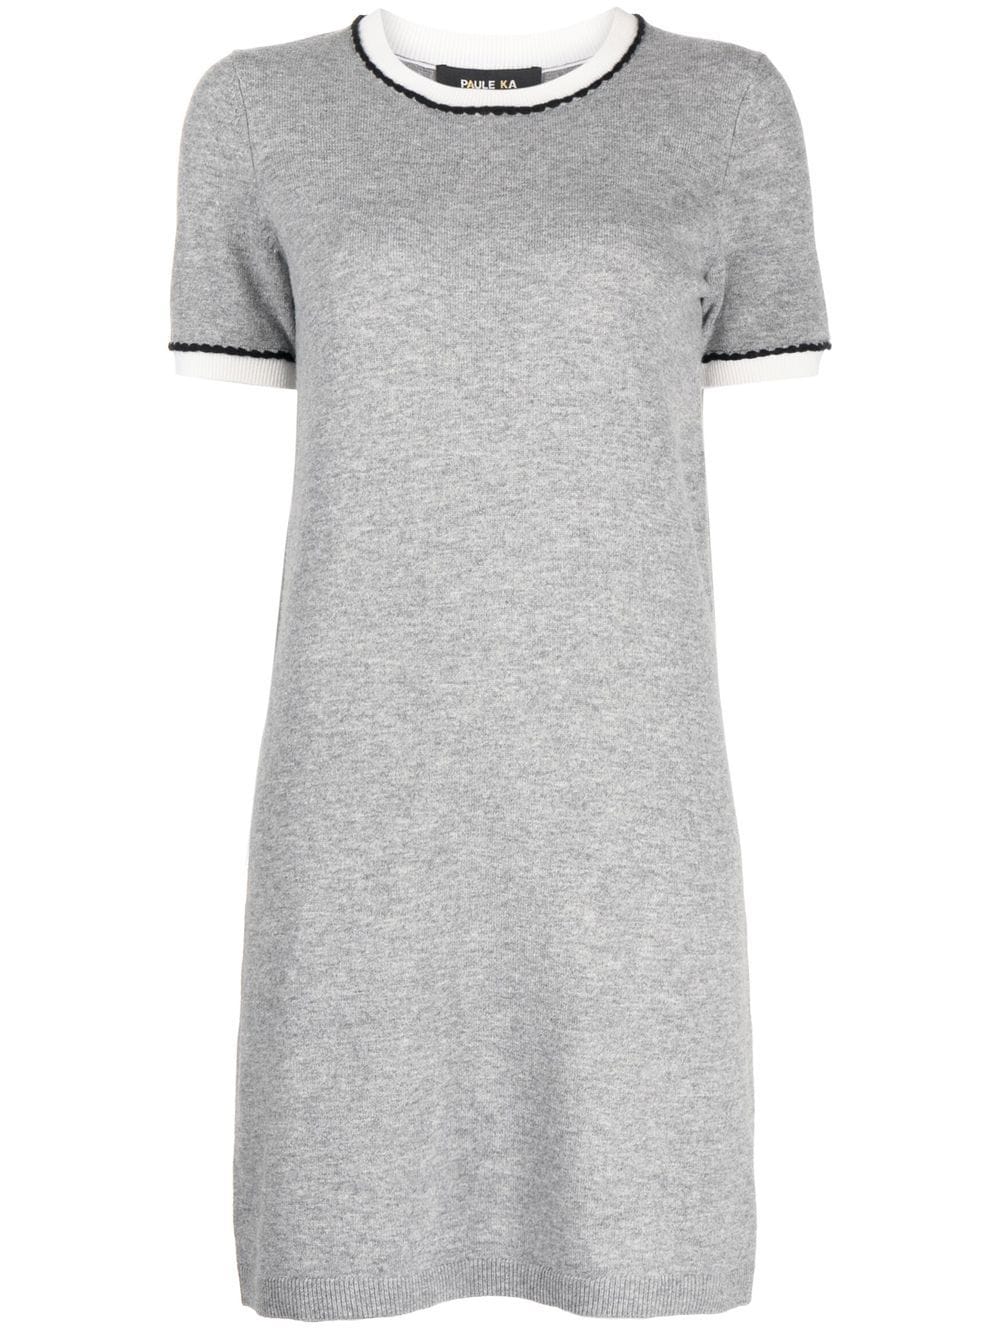 Paule Ka contrast-trim knitted dress - Grey von Paule Ka